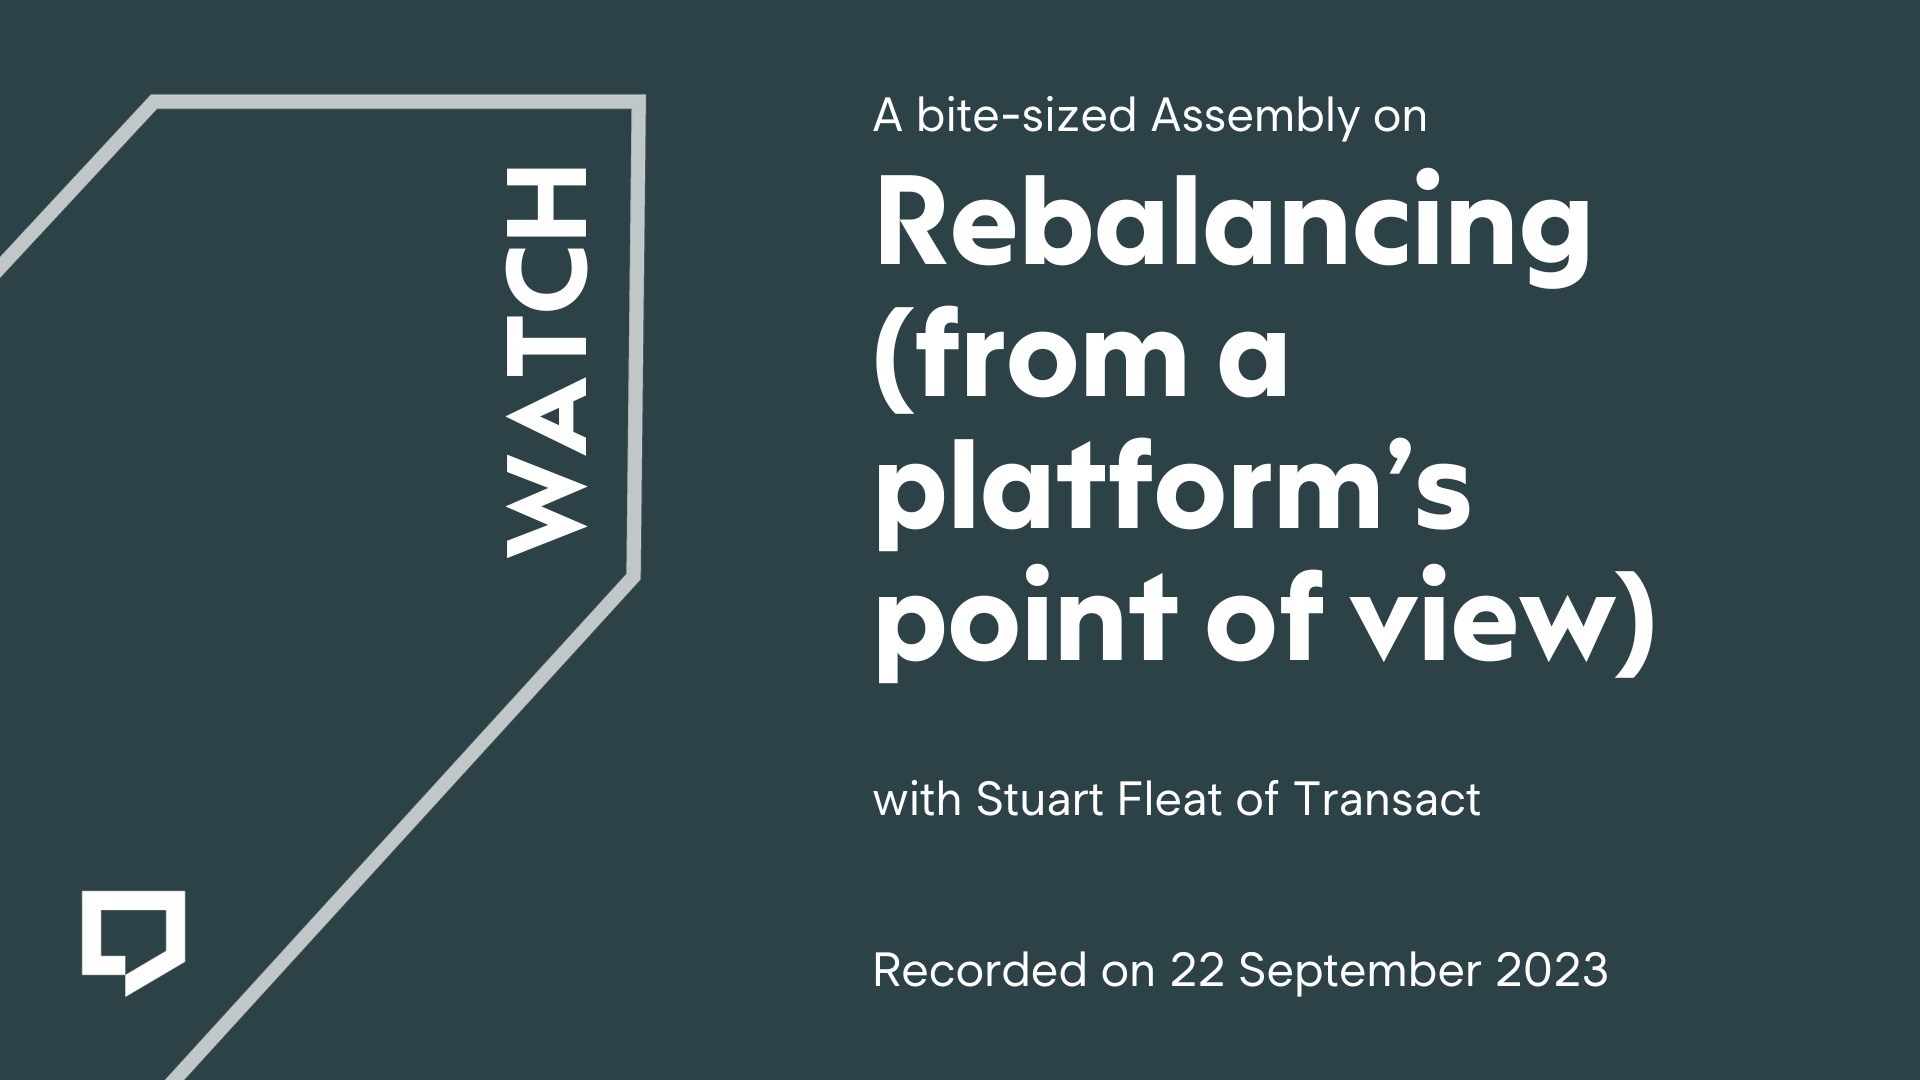 A bite-sized Assembly on rebalancing